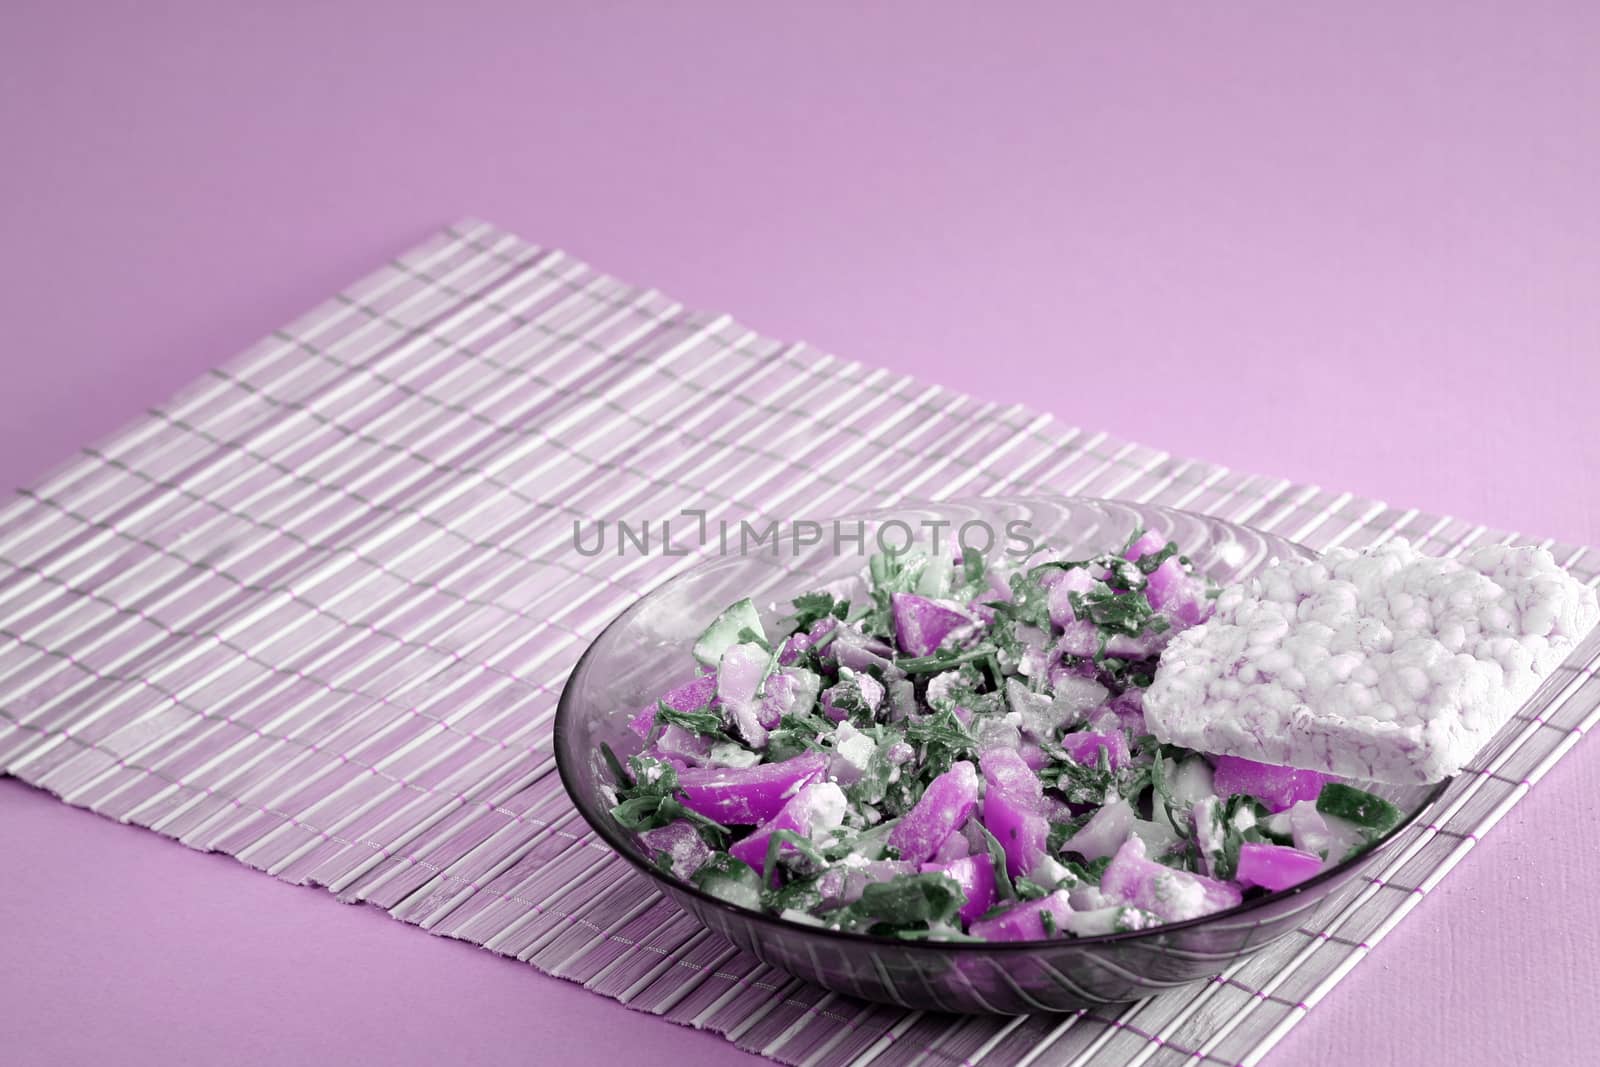 Salad by arosoft